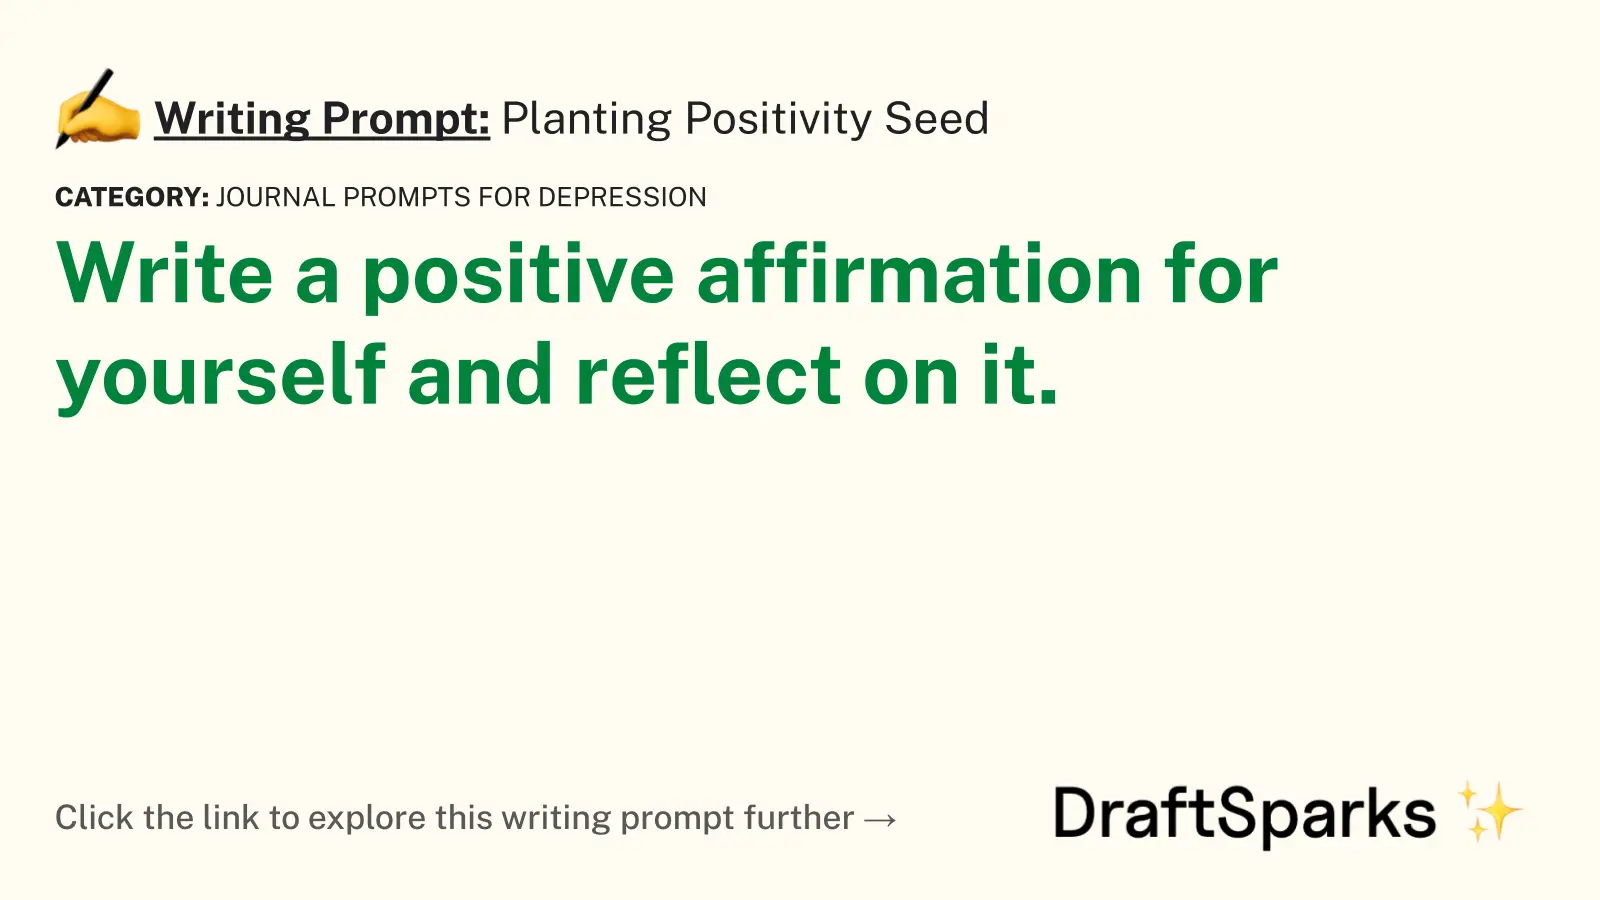 Planting Positivity Seed